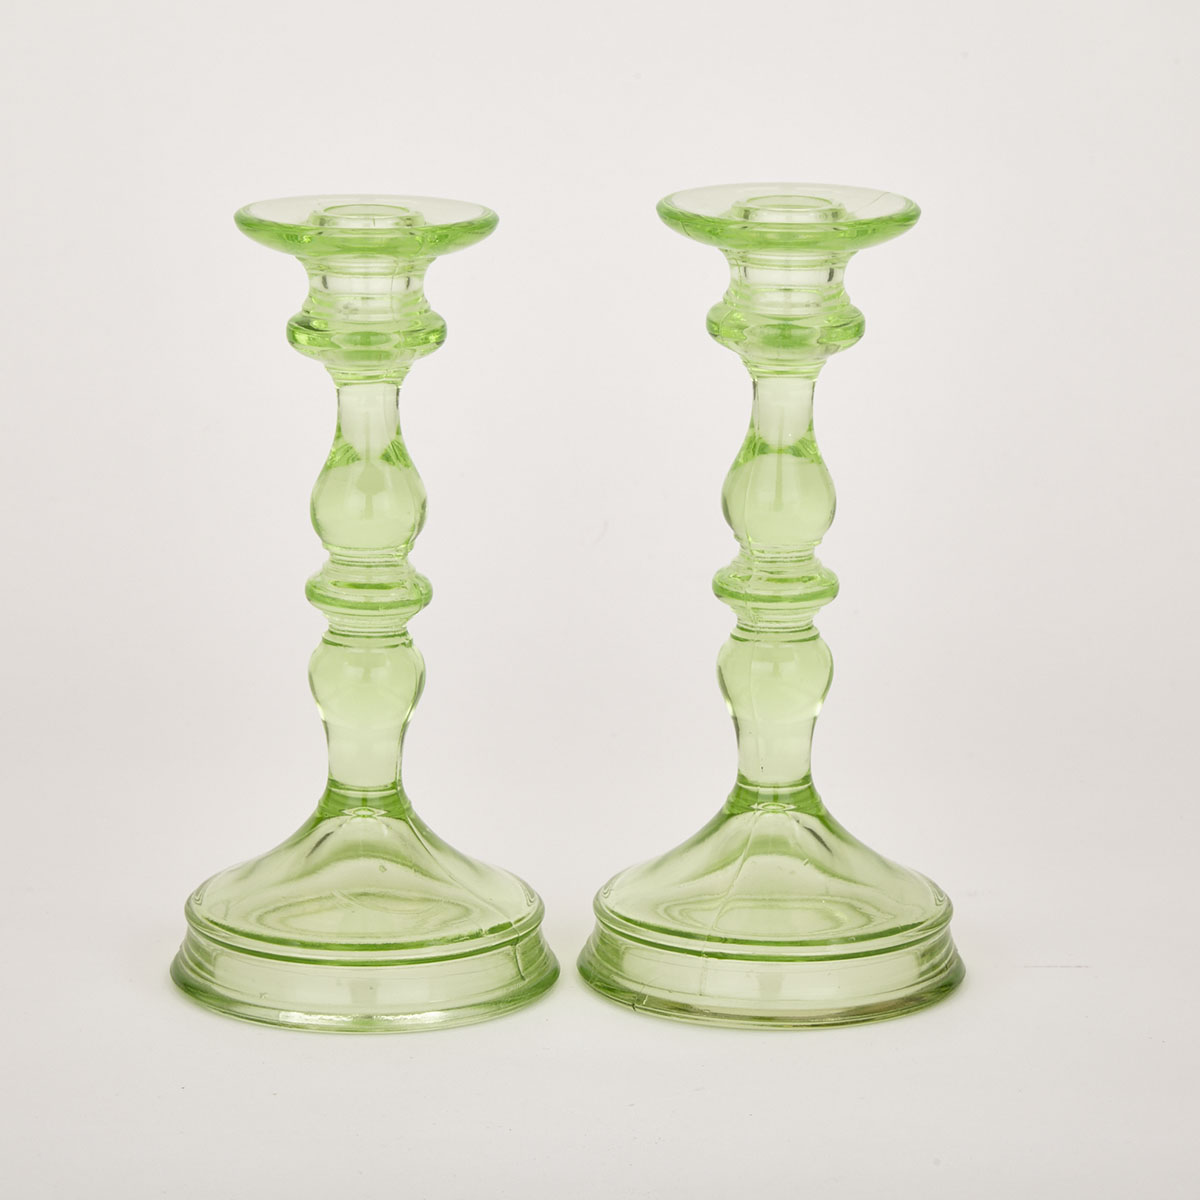 Pair of Green Uranium Glass Candlesticks, c.1930